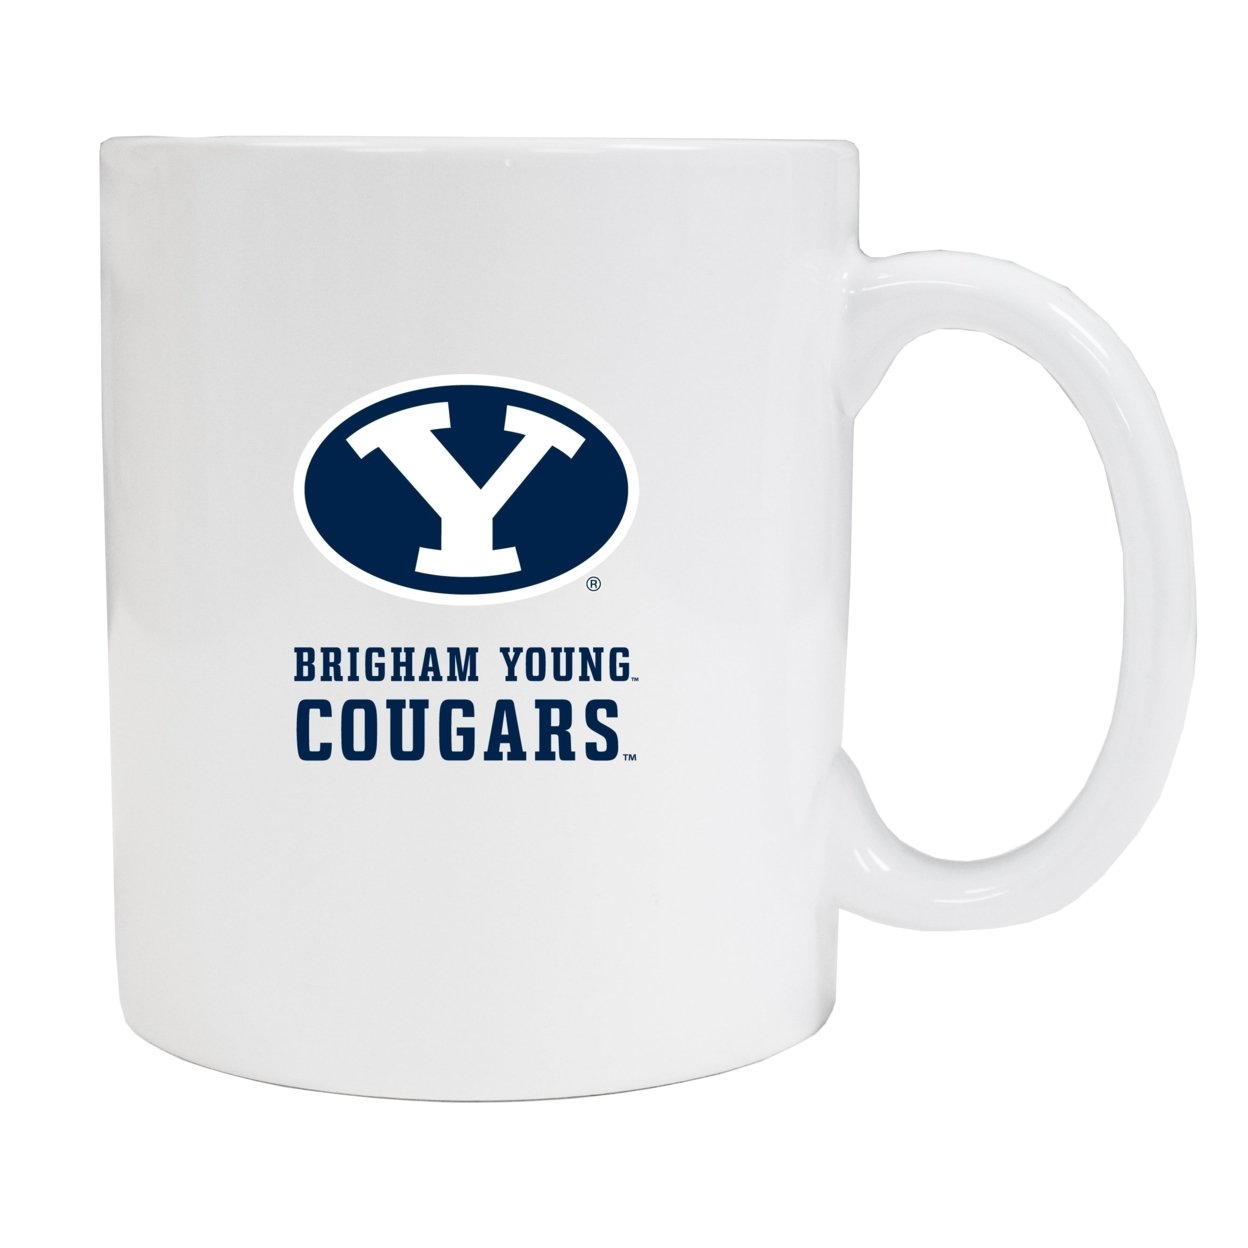 Brigham Young Cougars White Ceramic Mug (White).